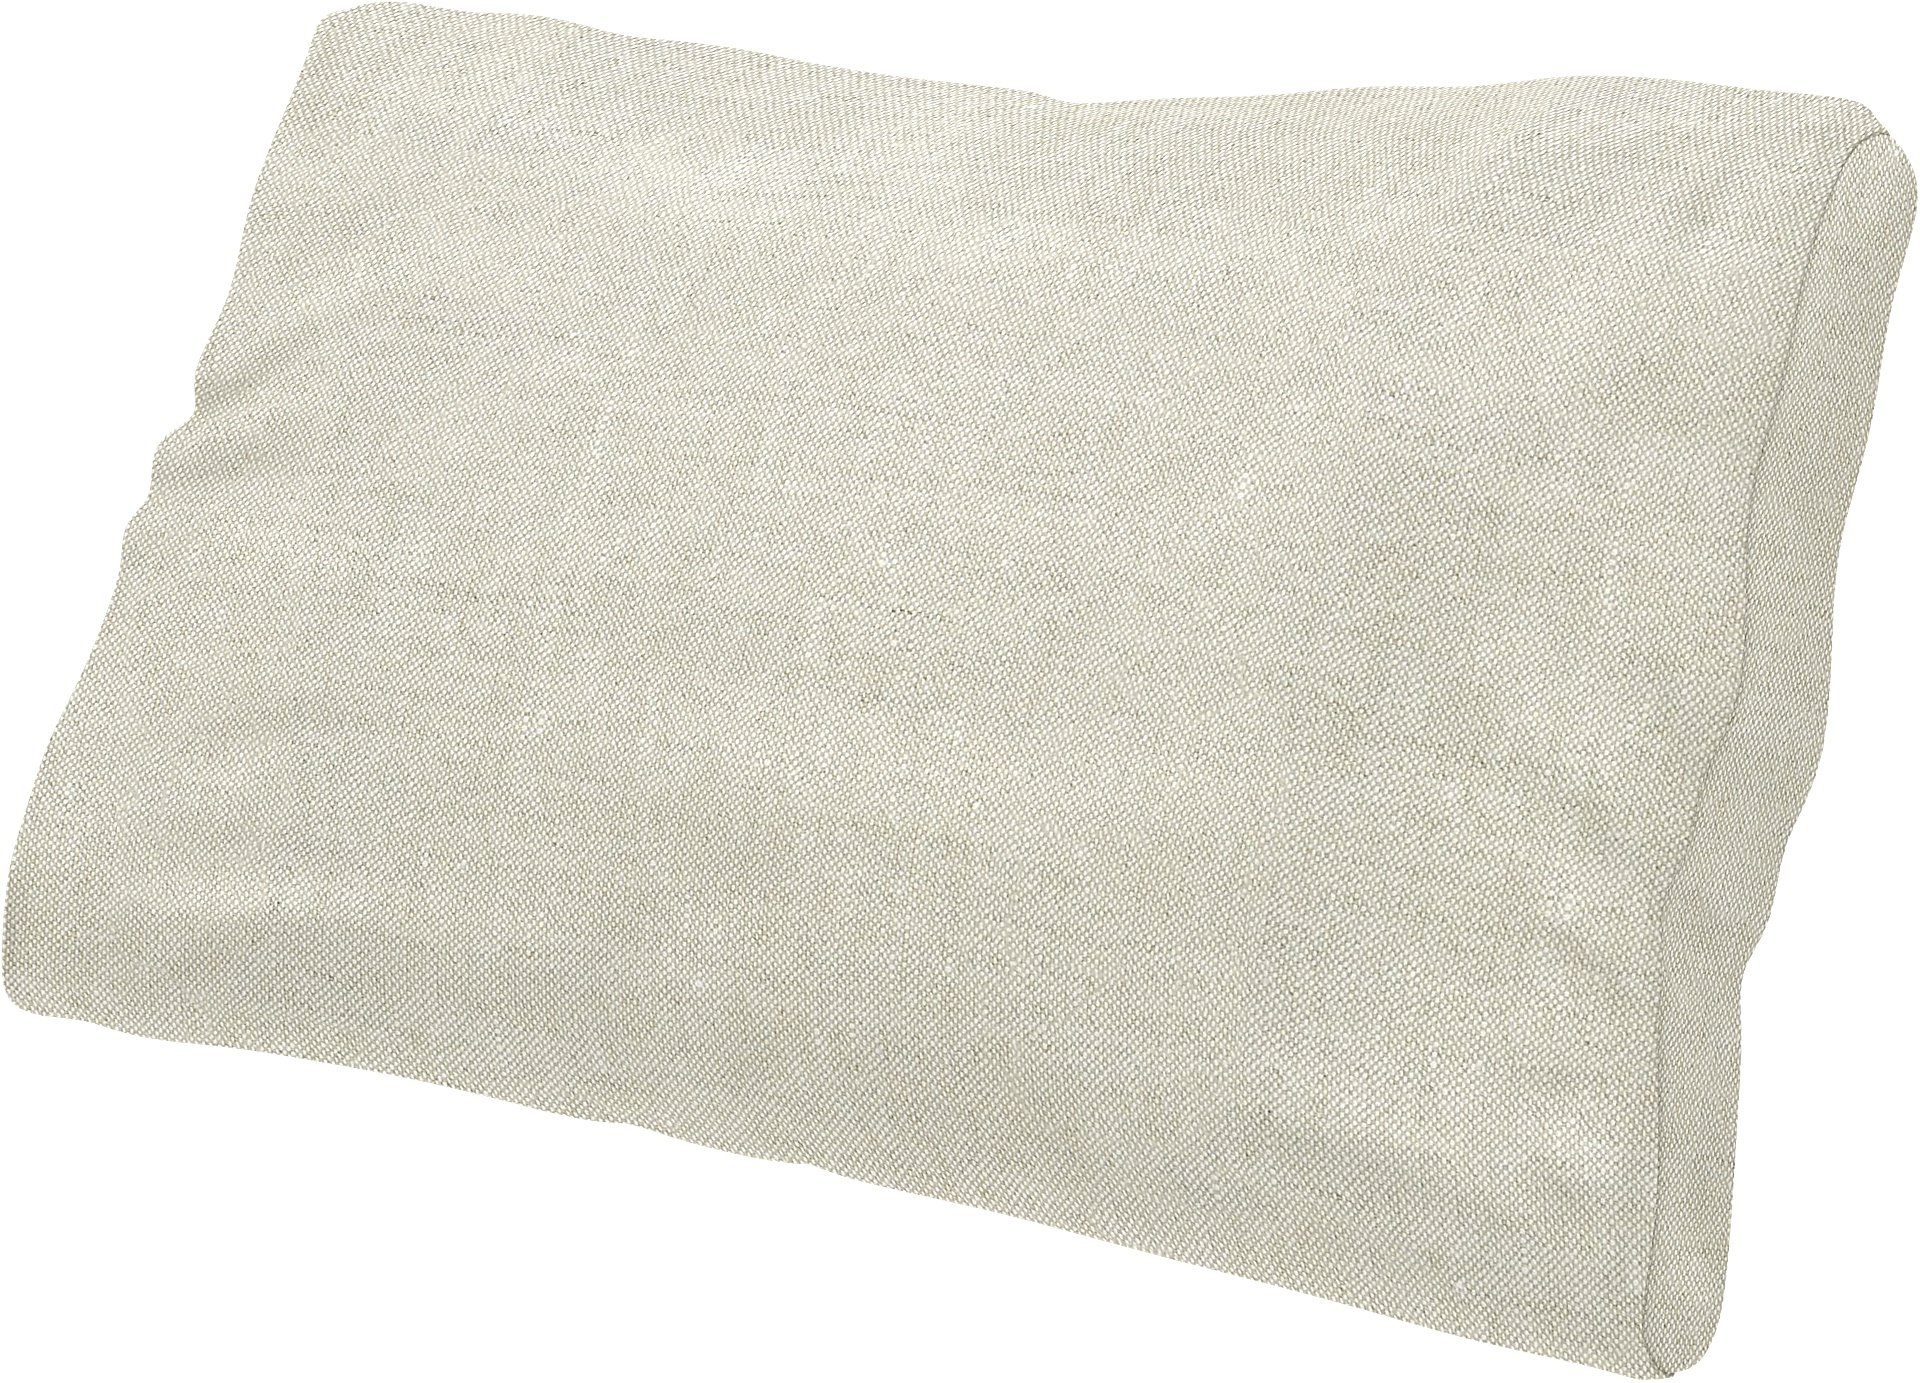 IKEA - Lumbar cushion cover Farlov, Natural, Linen - Bemz